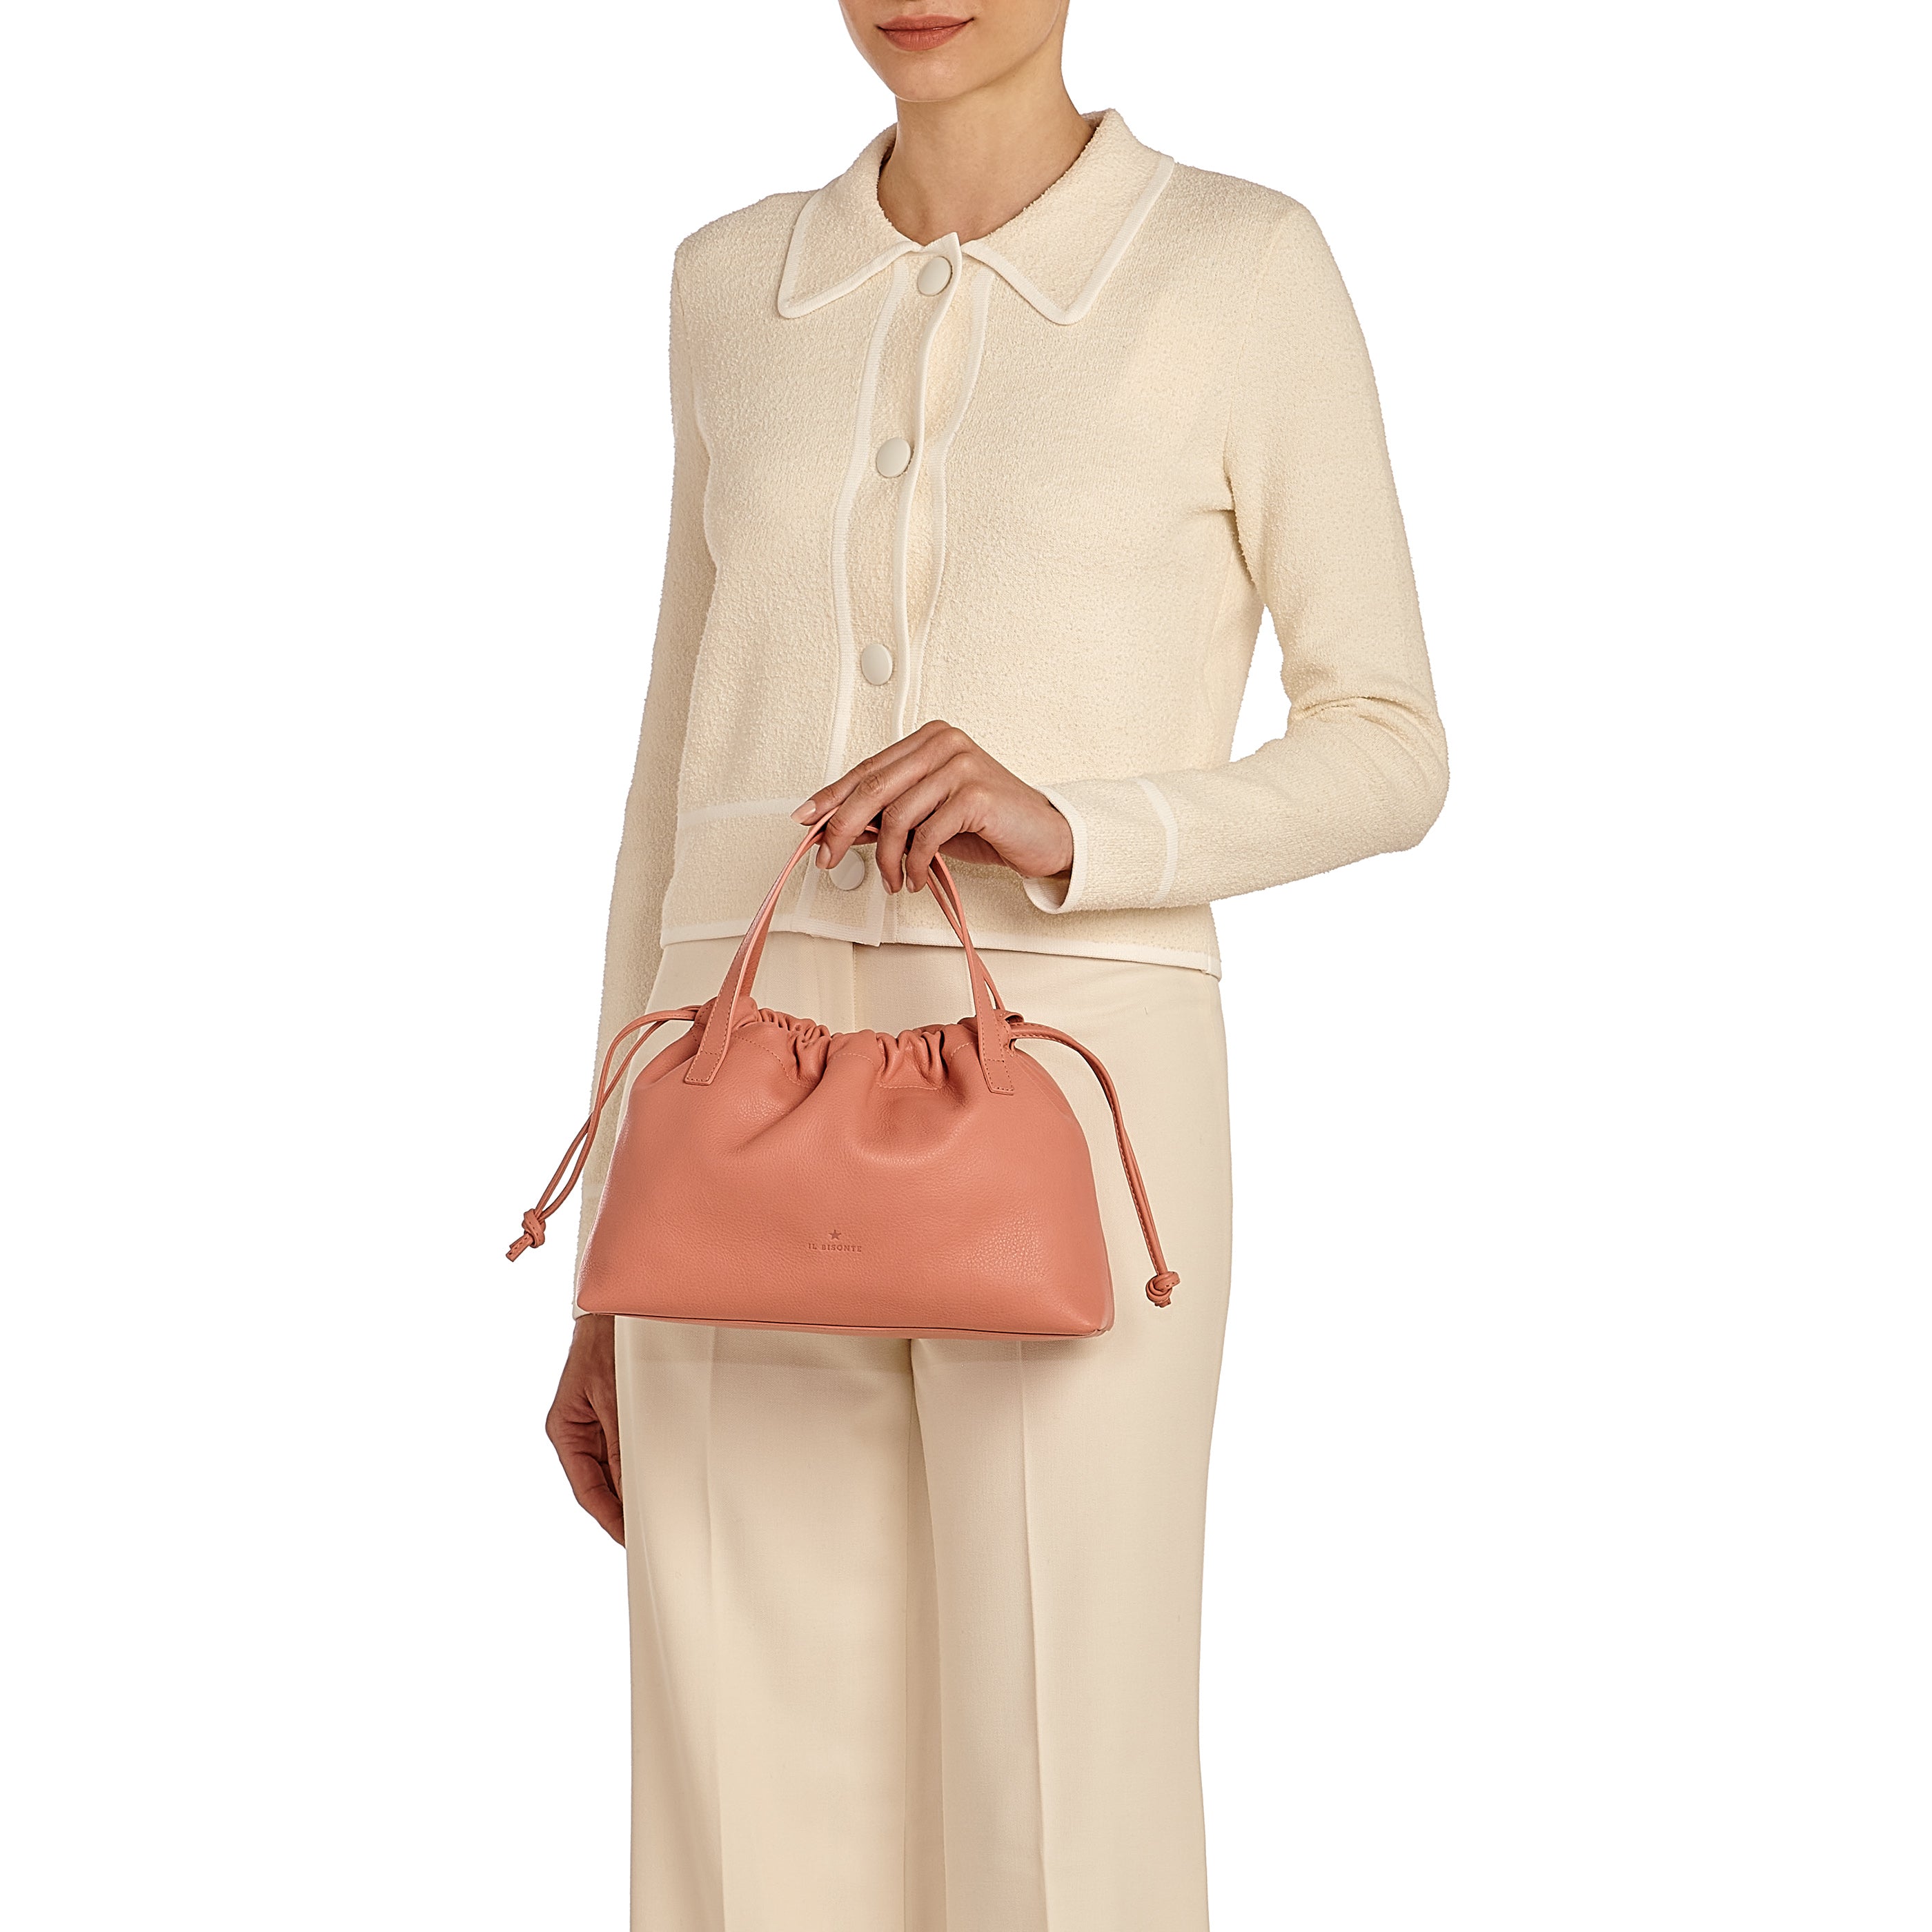 Bellini | Women's handbag in leather color grapefruit